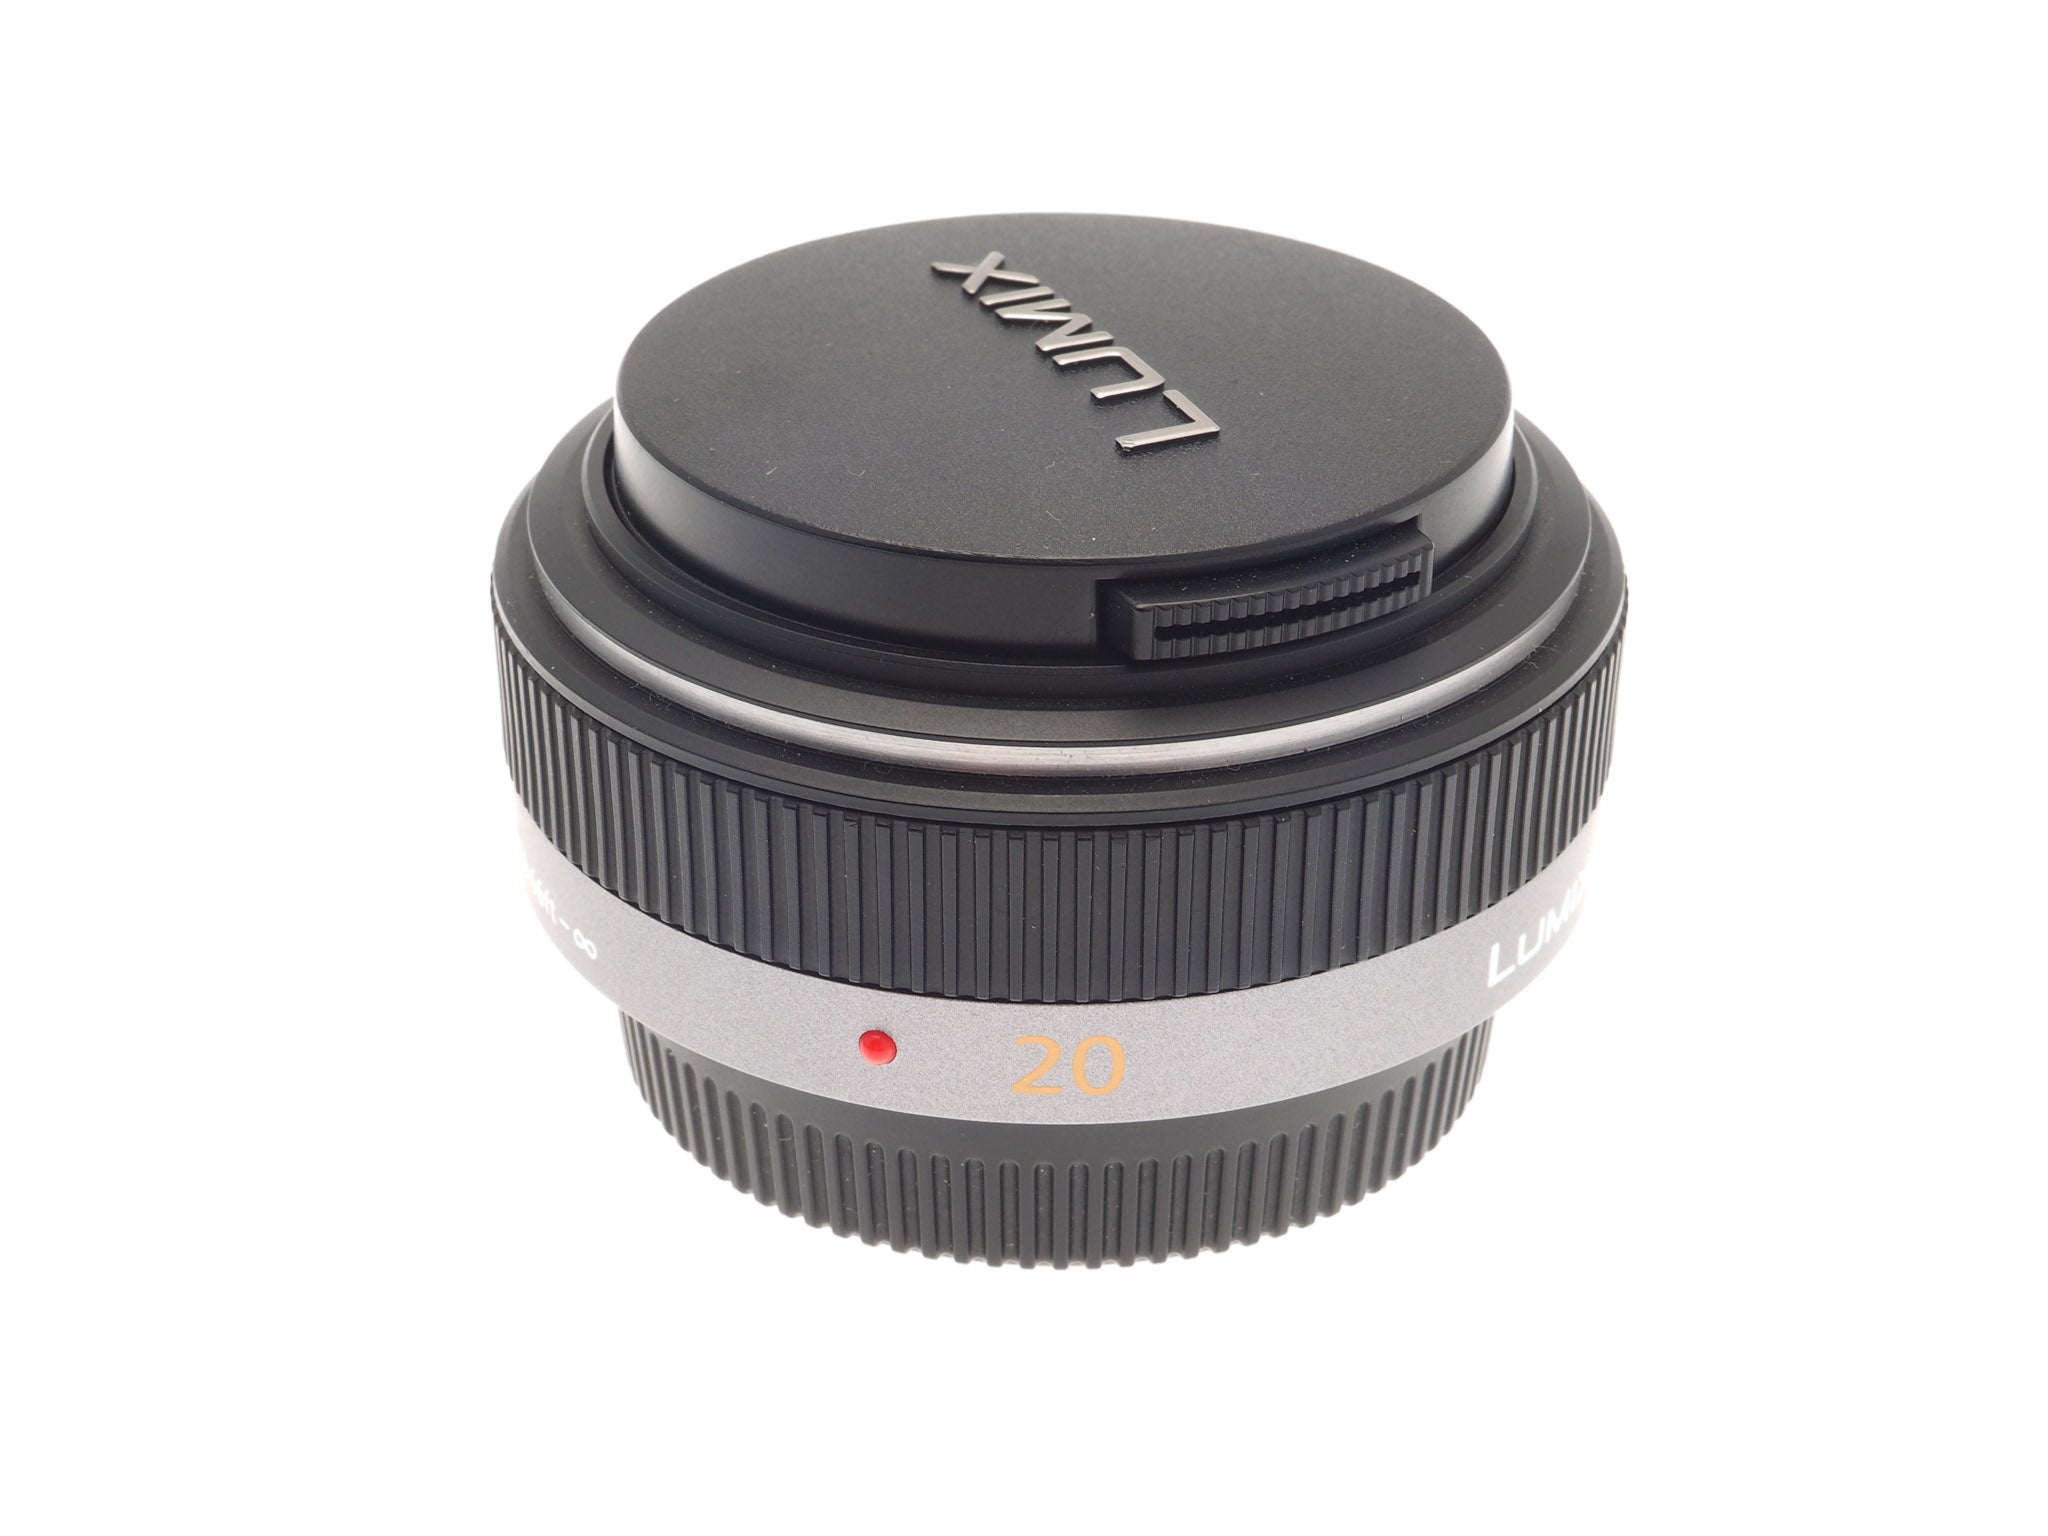 Panasonic 20mm f1.7 ASPH Lumix G - Lens